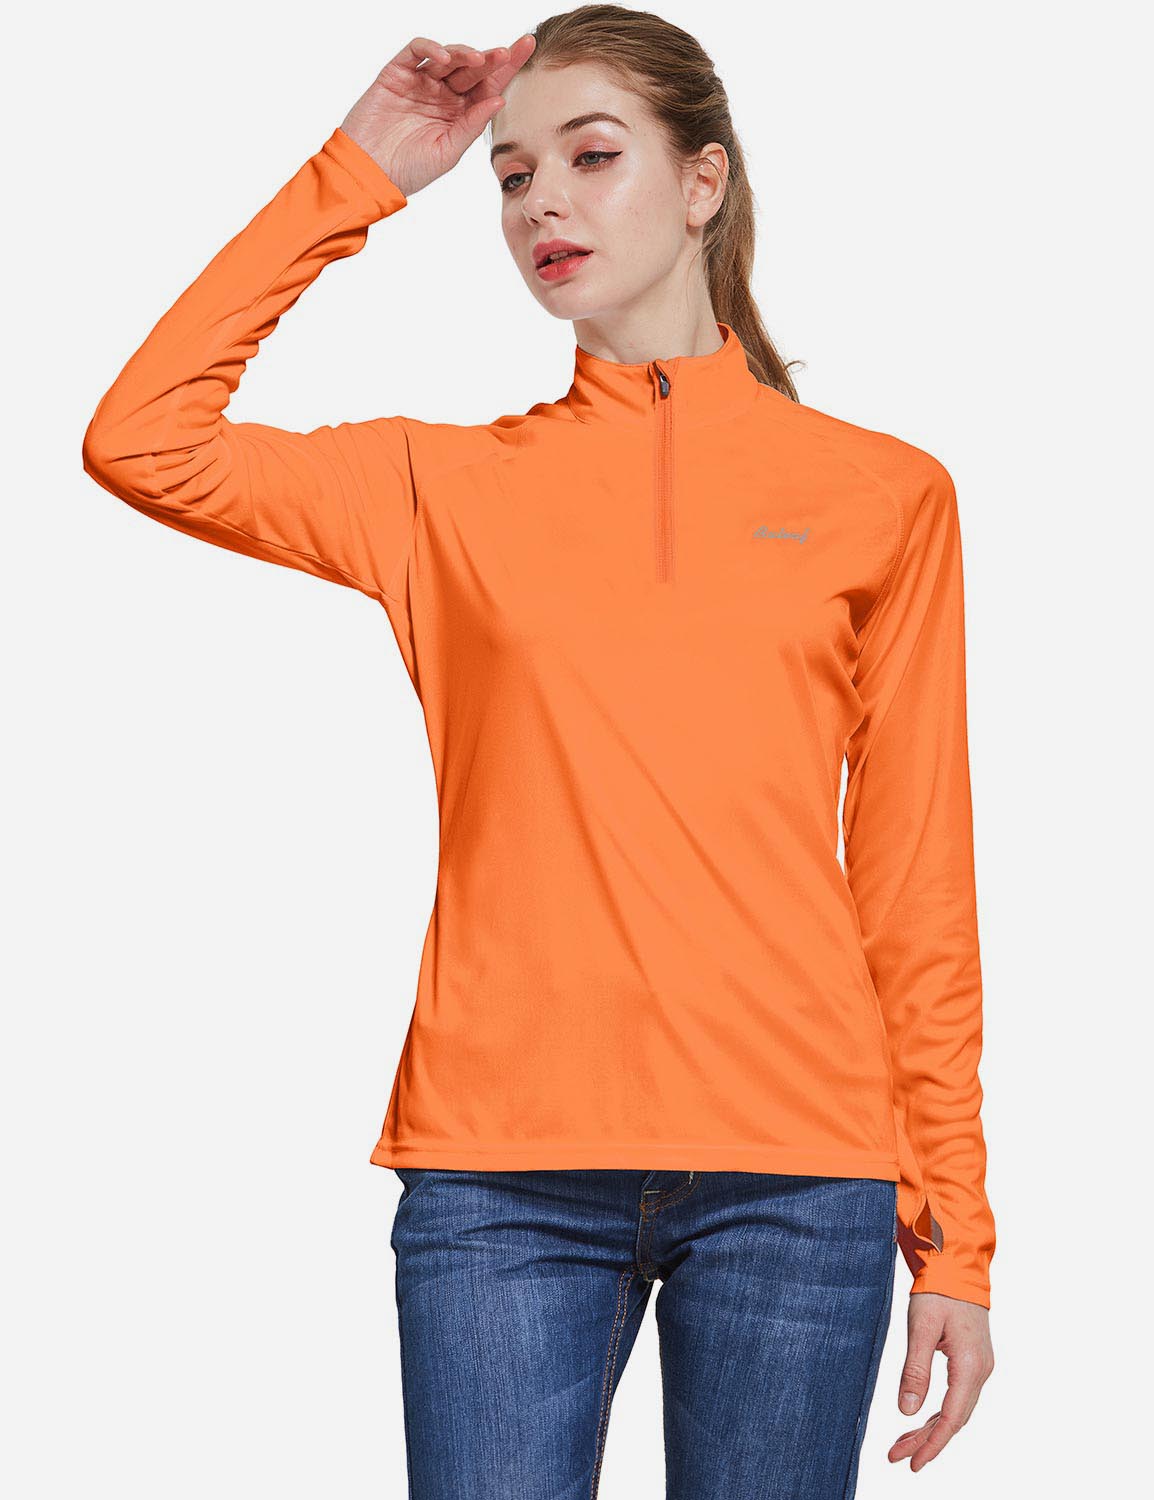 Baleaf Women's UP50+ Collared Long Sleeved Tshirt w Thumbholes aga065 Orange Side